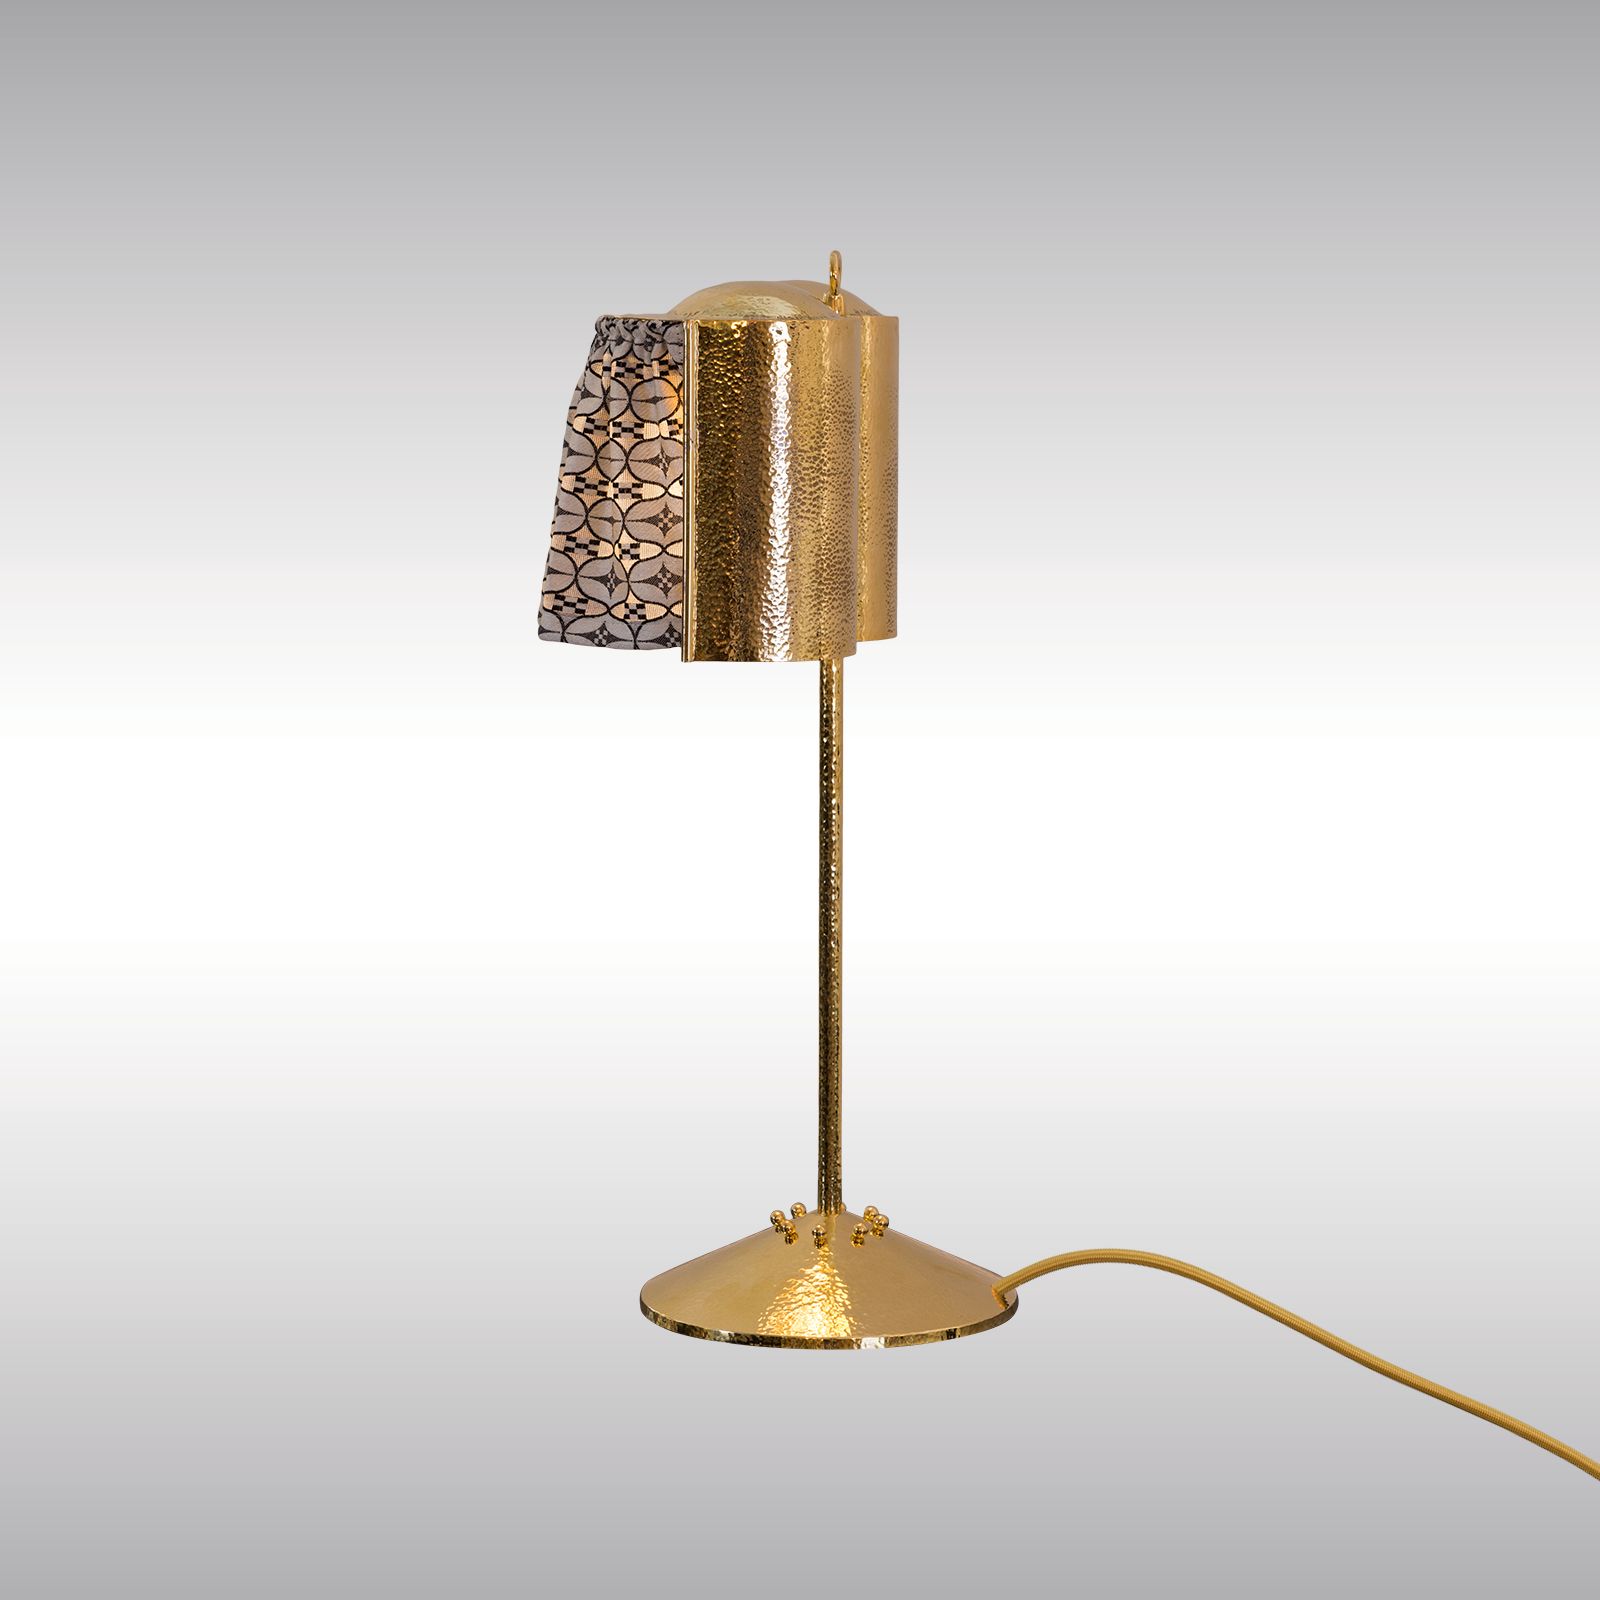 WOKA LAMPS VIENNA - OrderNr.: 22001|Josef Hoffmann and Wiener Werkstaeatte Desk Lamp - candle-holder - Design: Josef Hoffmann